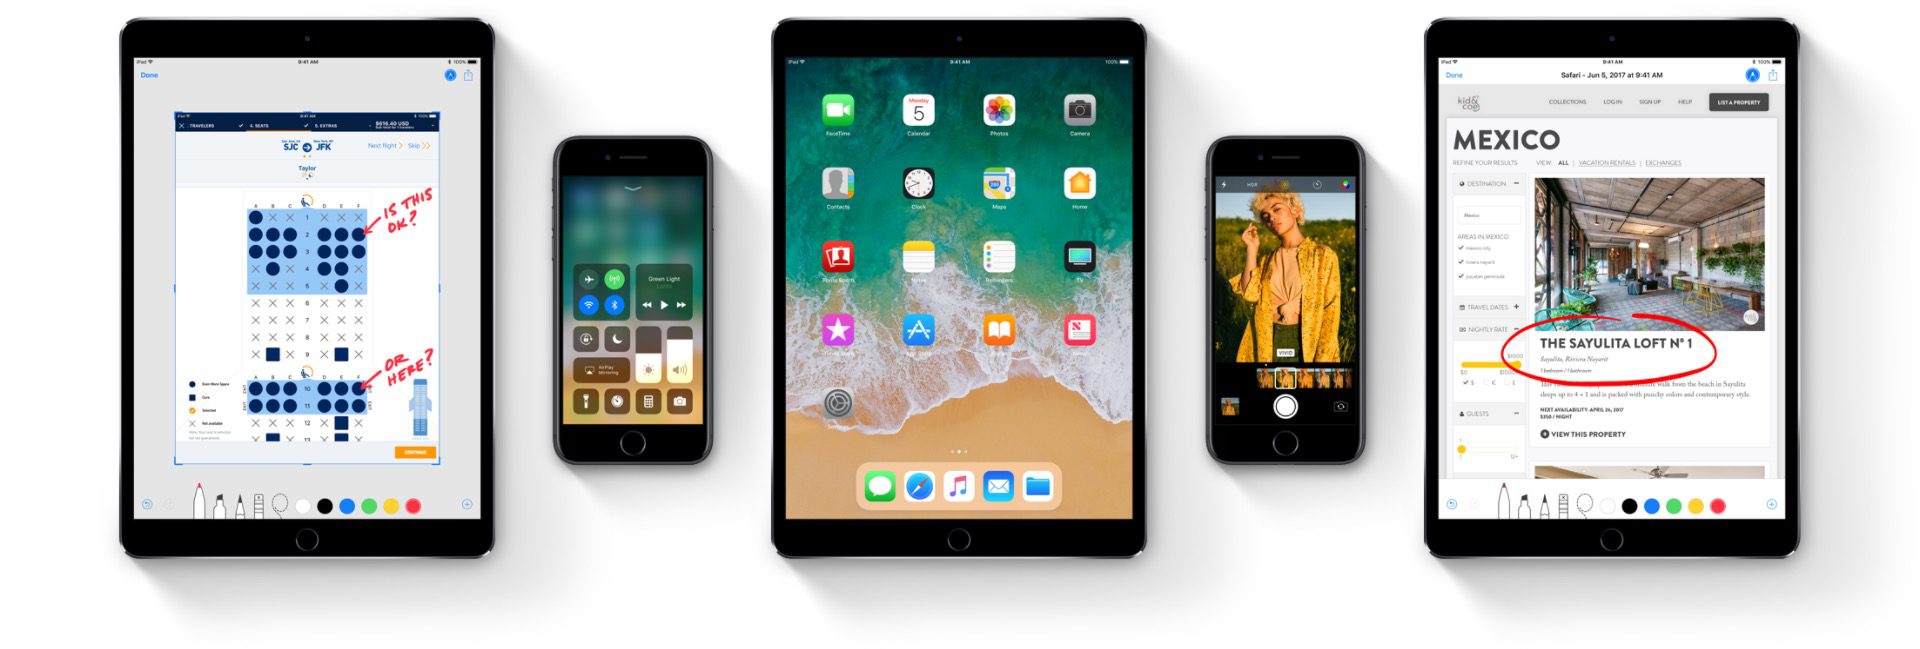 Apple iOS 11 on iPhone 7 and iPad Pro